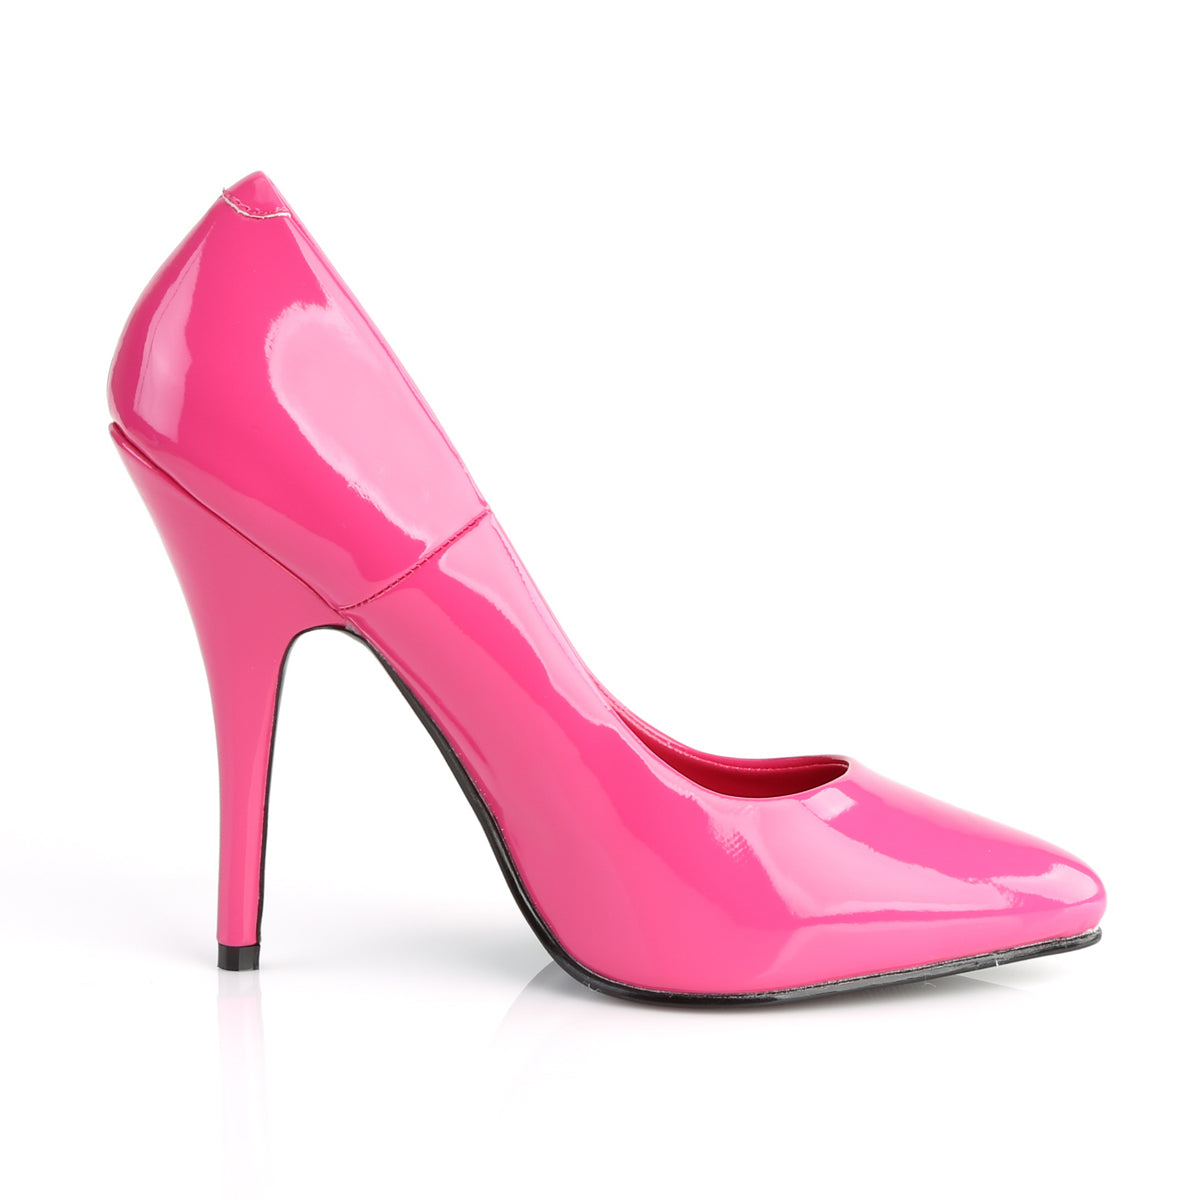 SEDUCE-420 Hot Pink High Heels